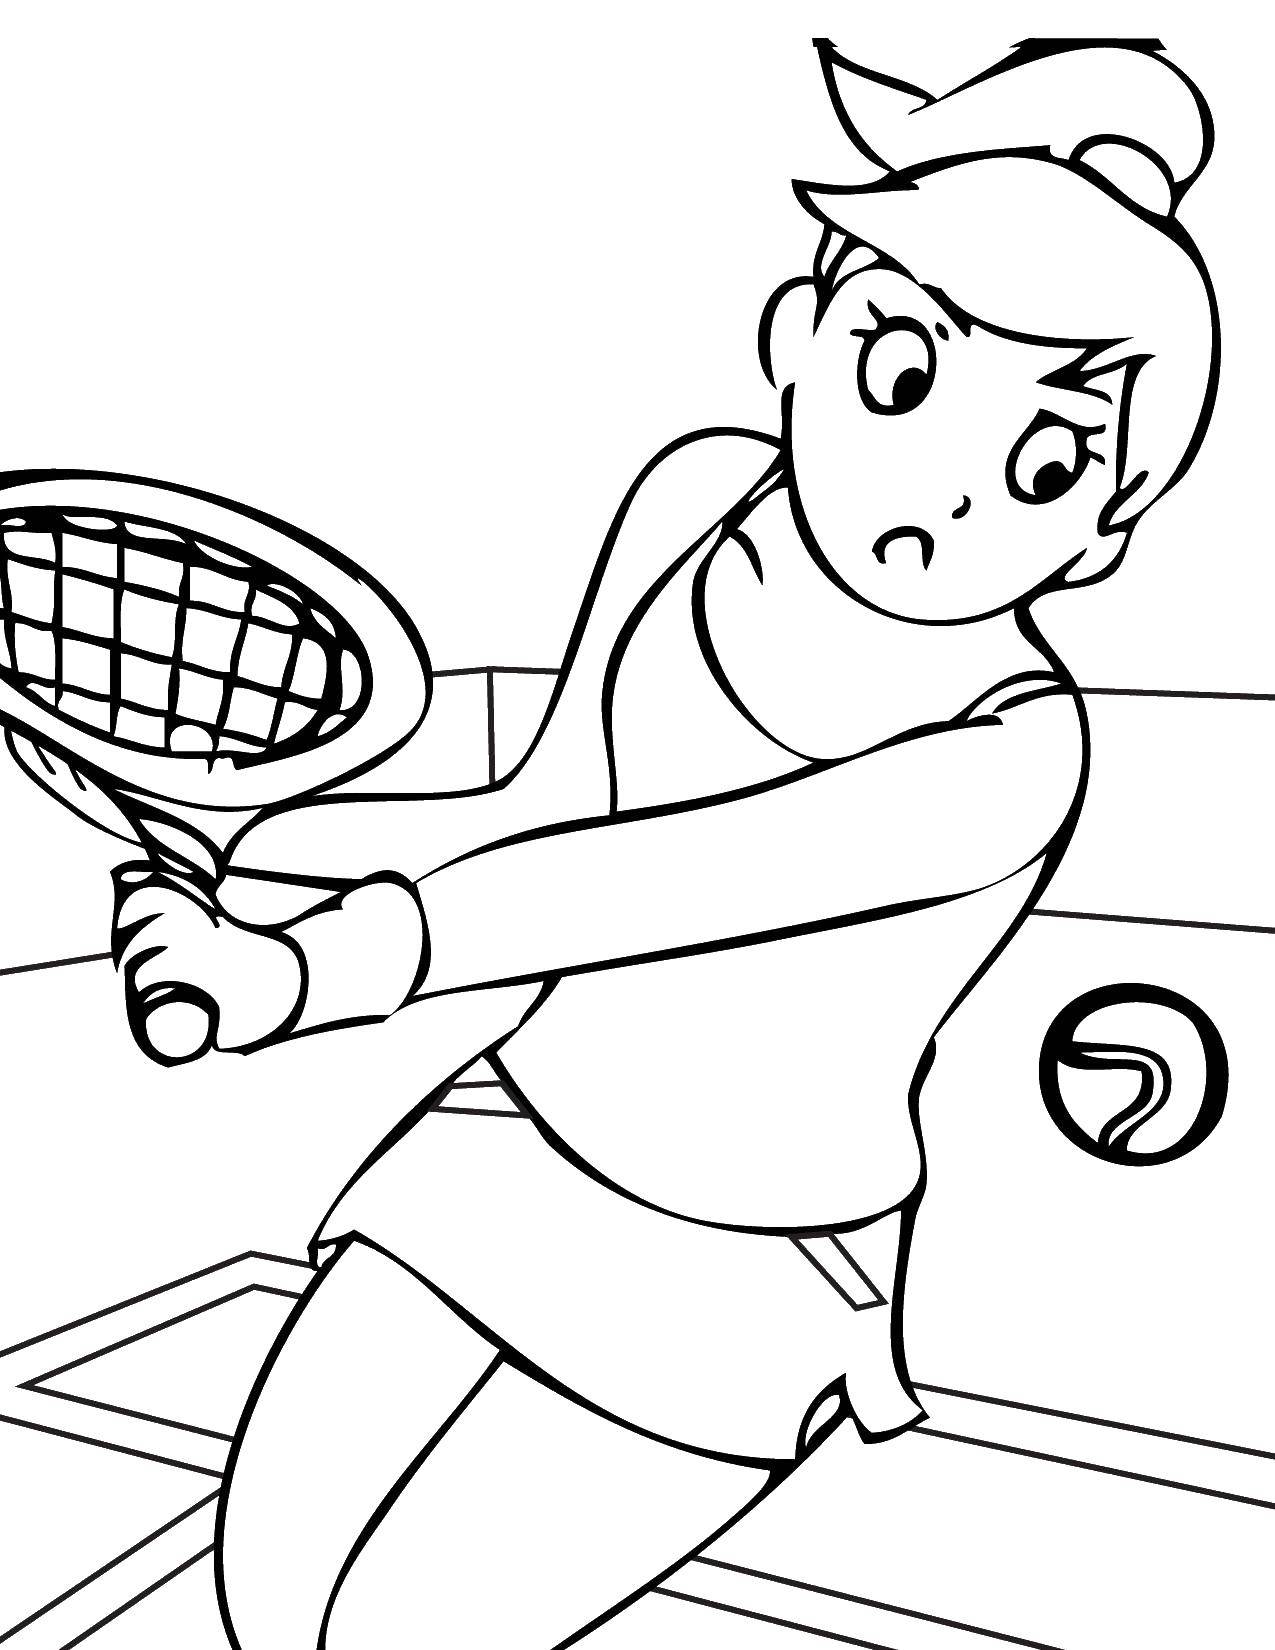 Название: Раскраска Девушка играет в теннис. Категория: Спорт. Теги: спорт, теннис, ракетка.